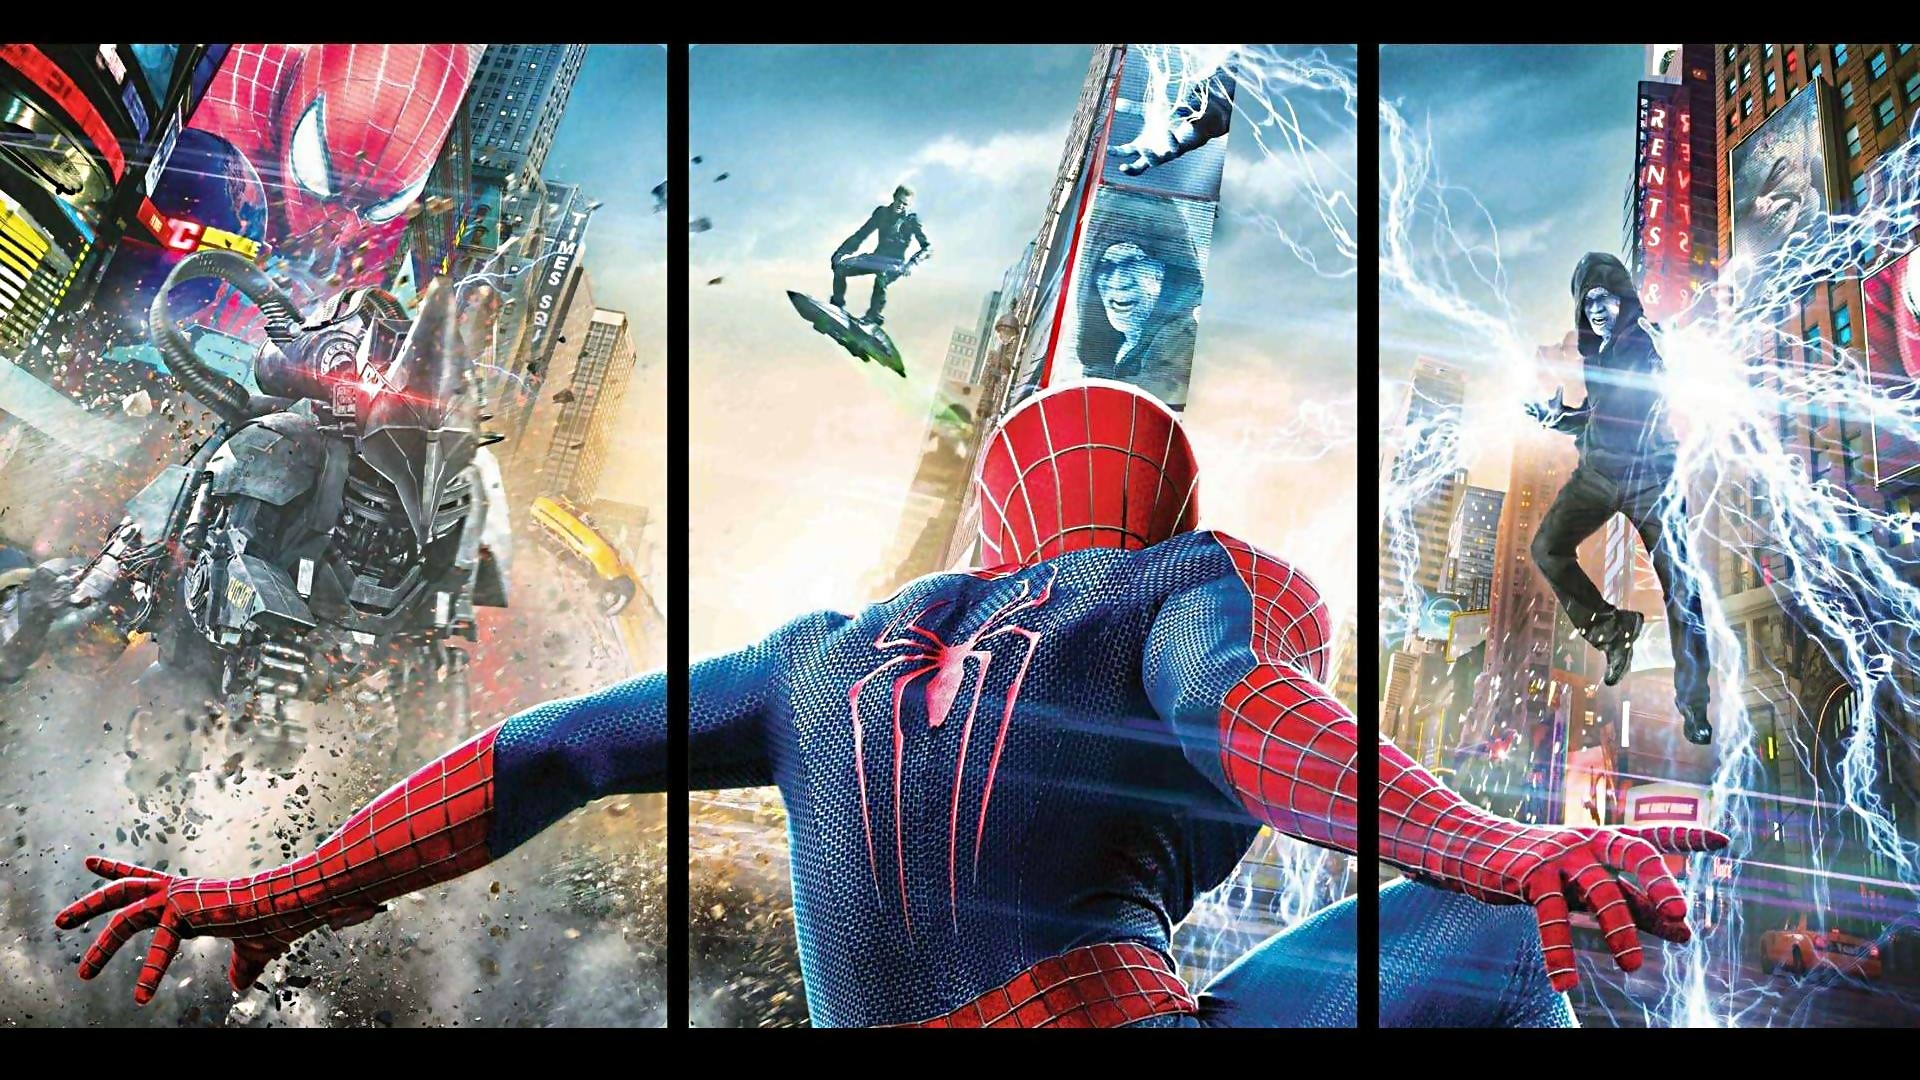 1920x1080 ... The Amazing Spider-Man 2 Movie Poster Wallpaper #1 by ProfessorAdagio